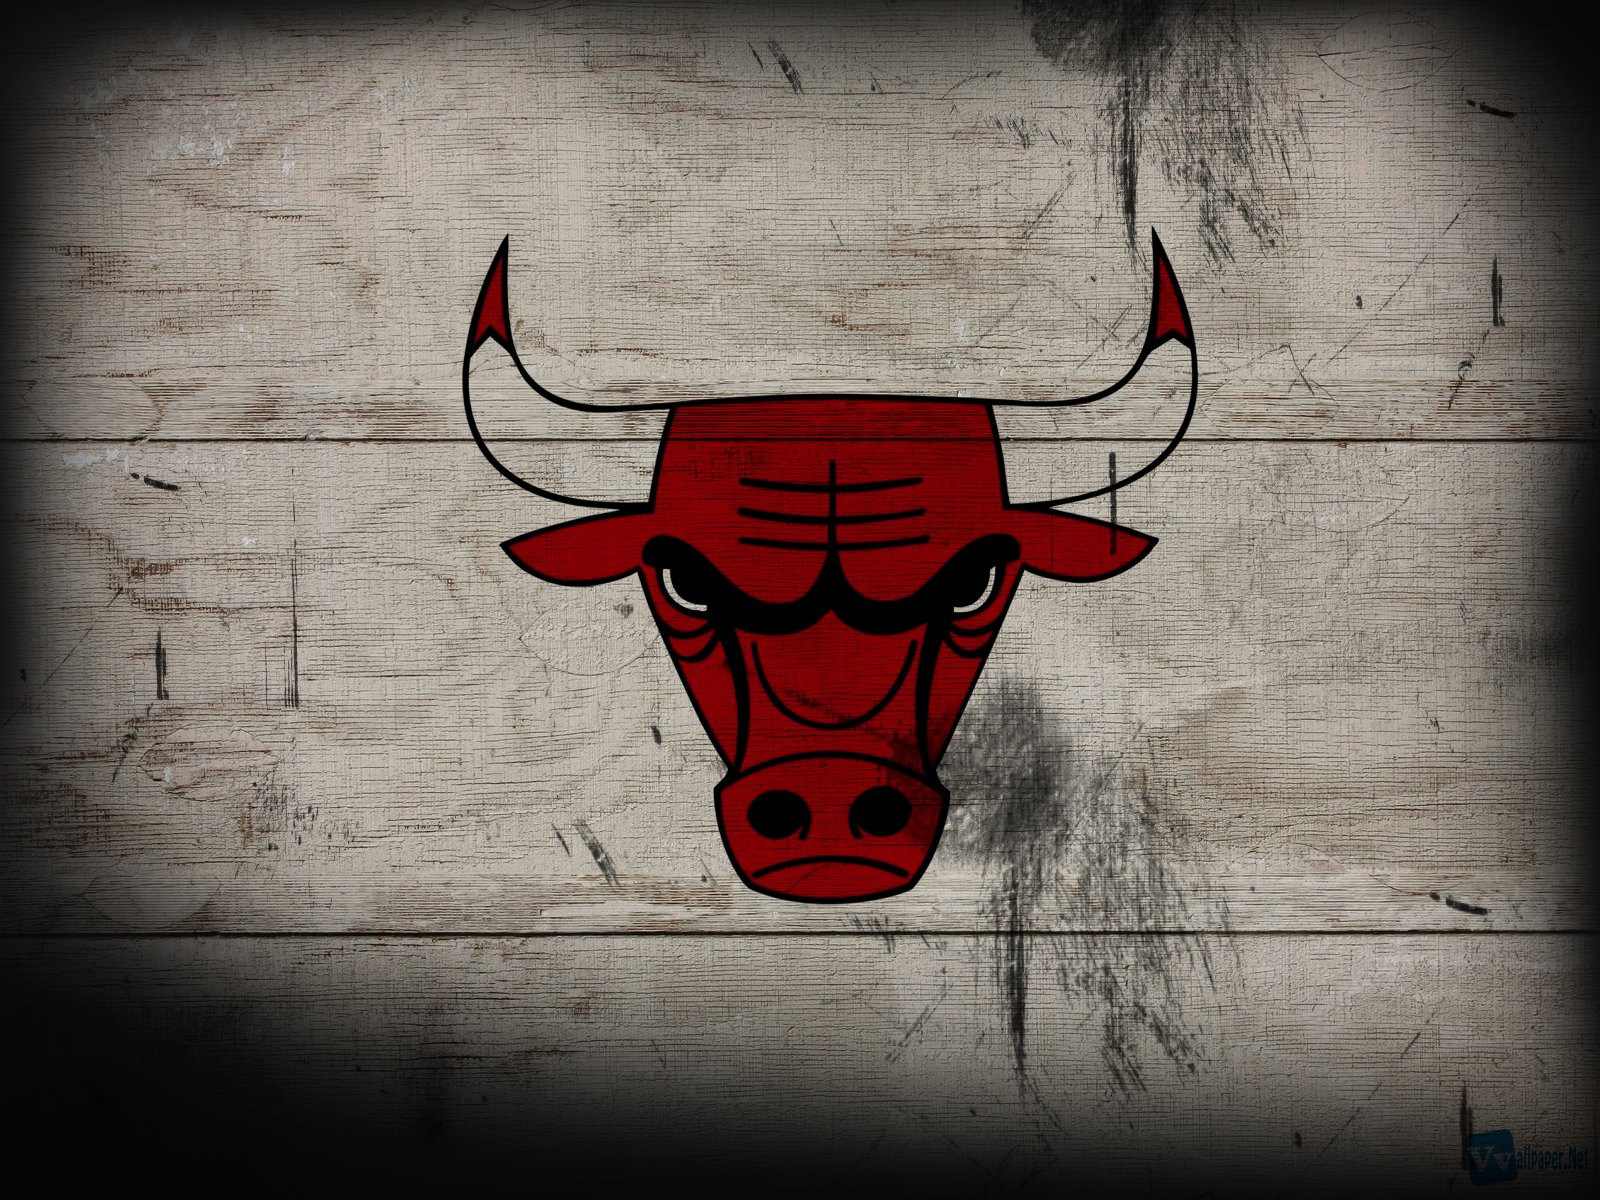 Bulls Basketball Team Logo HD Wallpaper Background